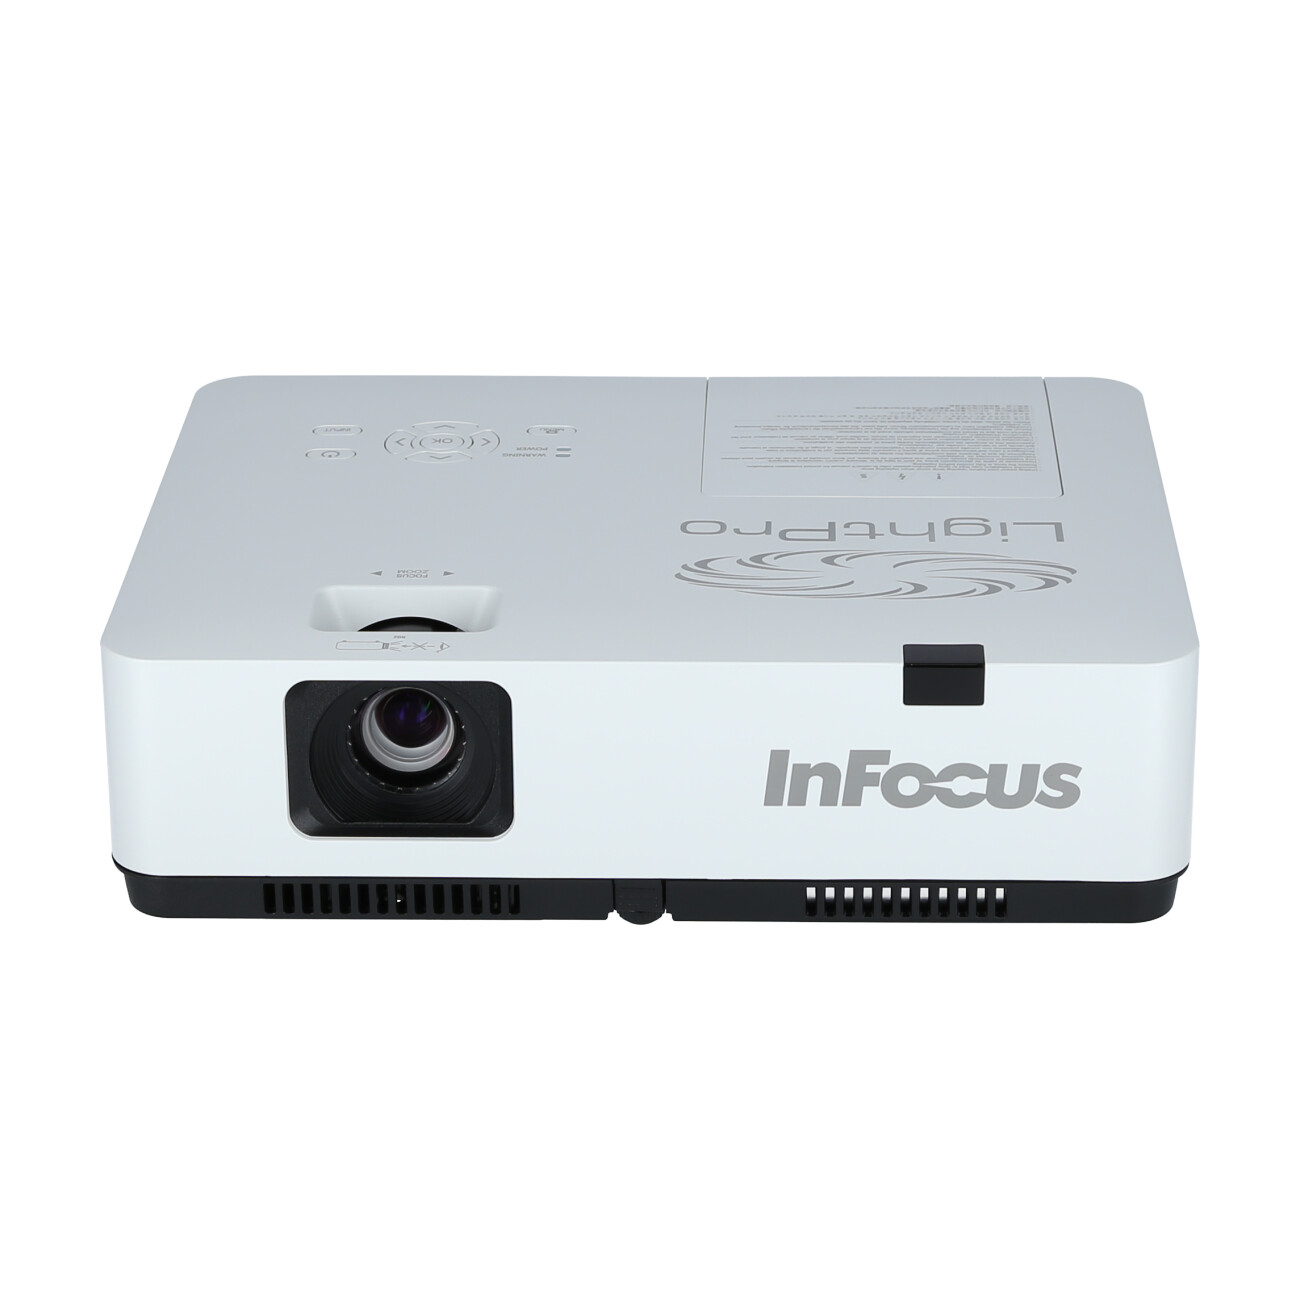 InFocus-IN1029